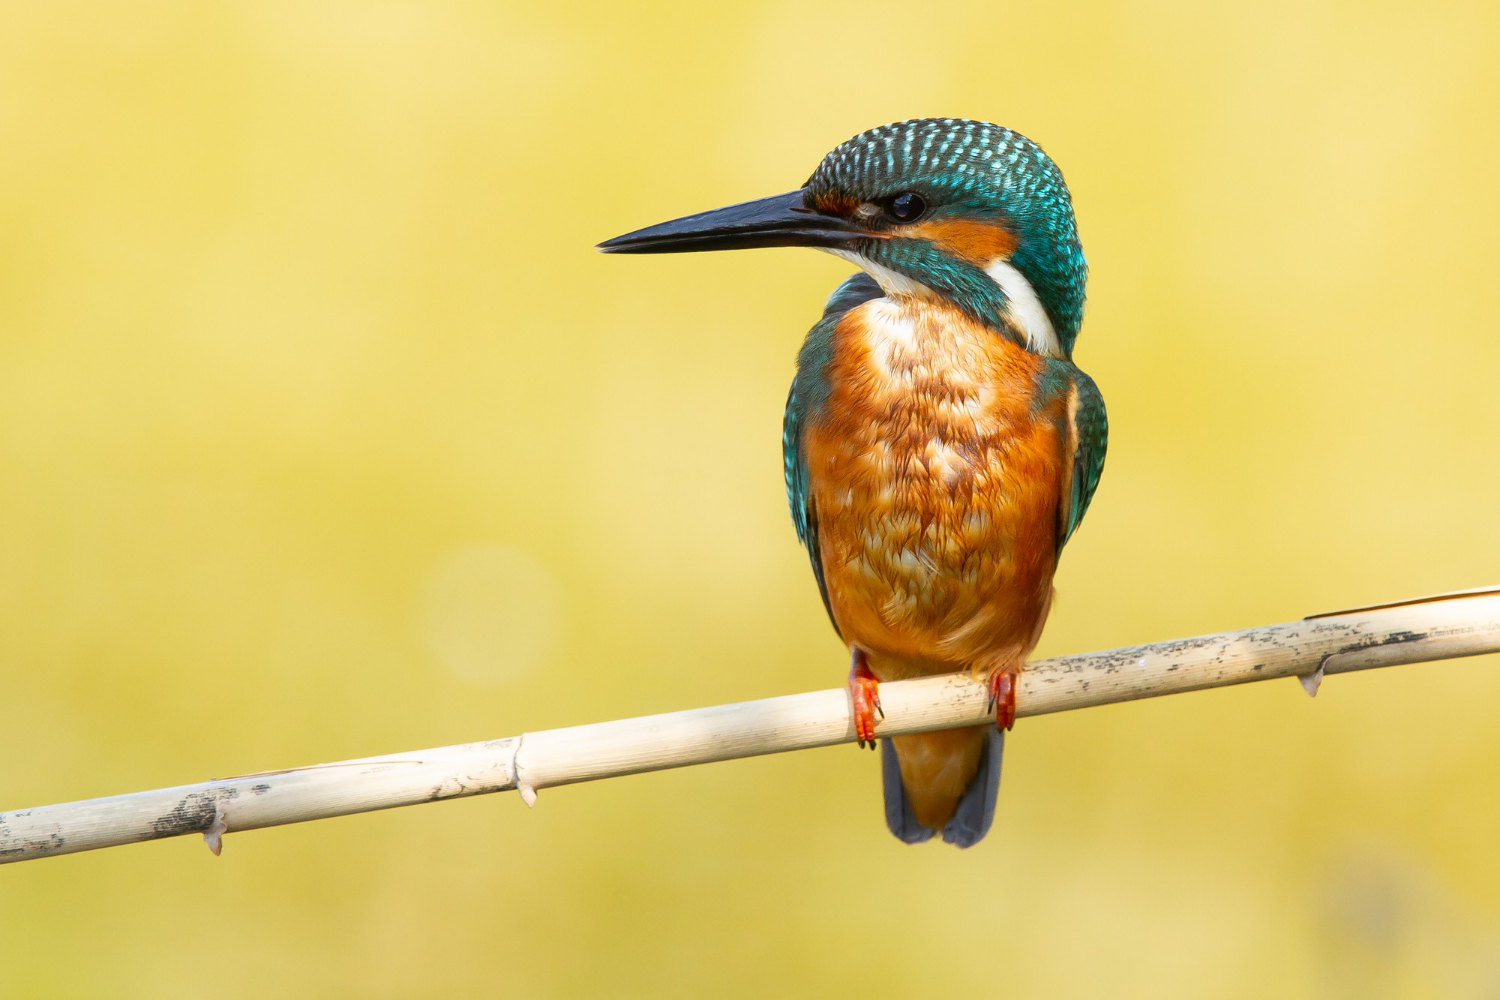 can hummingbirds recognize faces